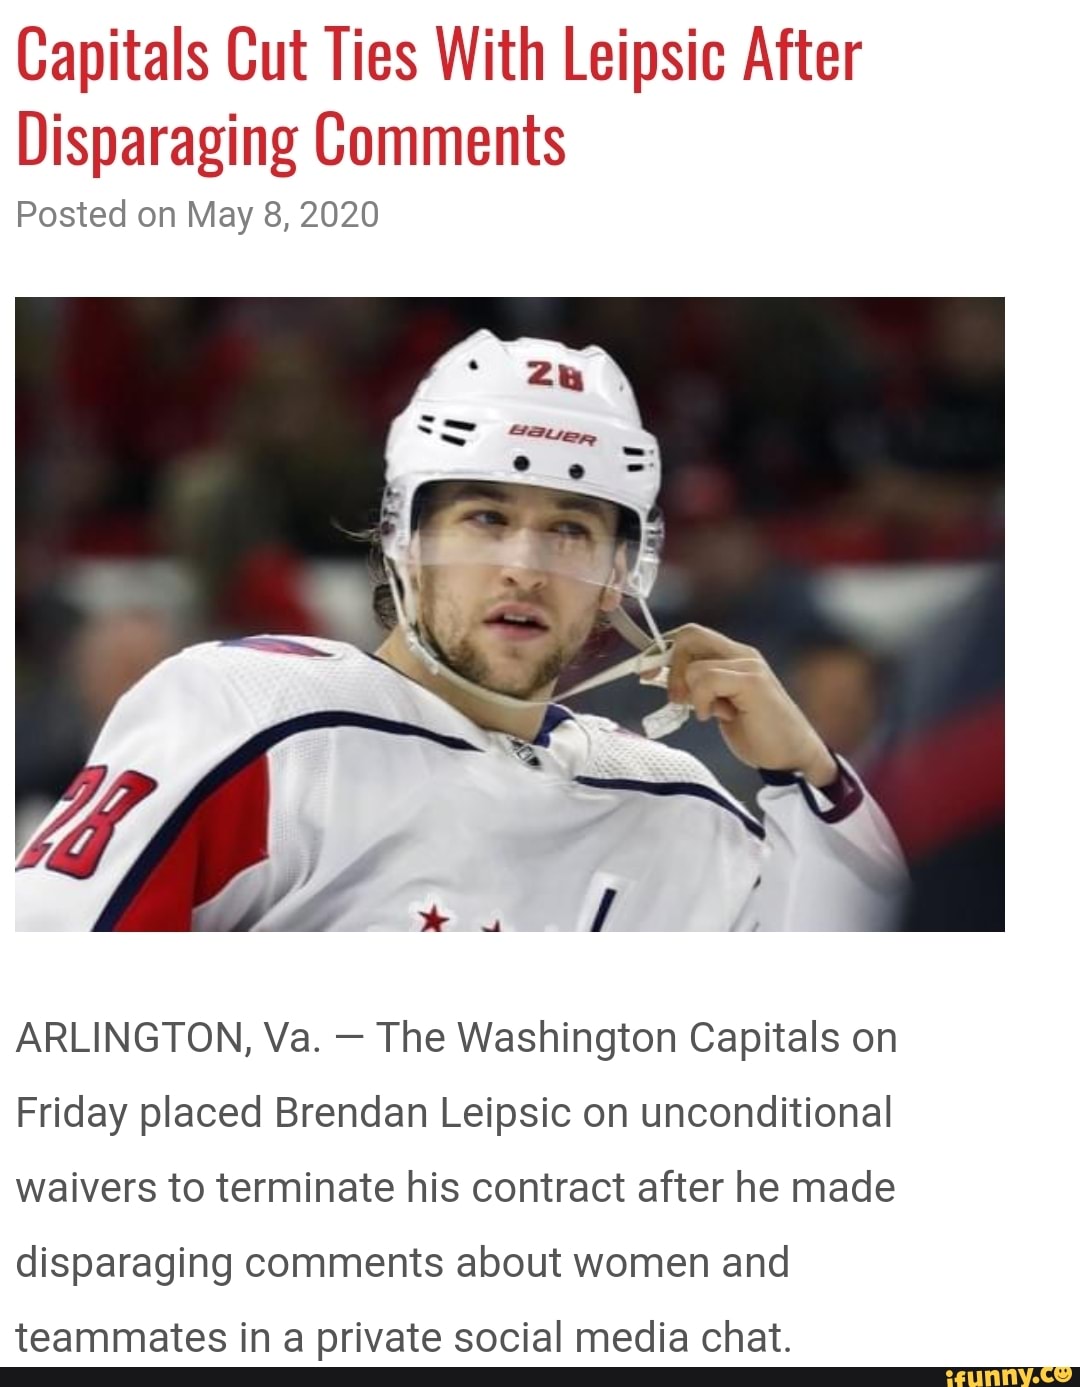 Washington Capitals terminating Brendan Leipsic's contract